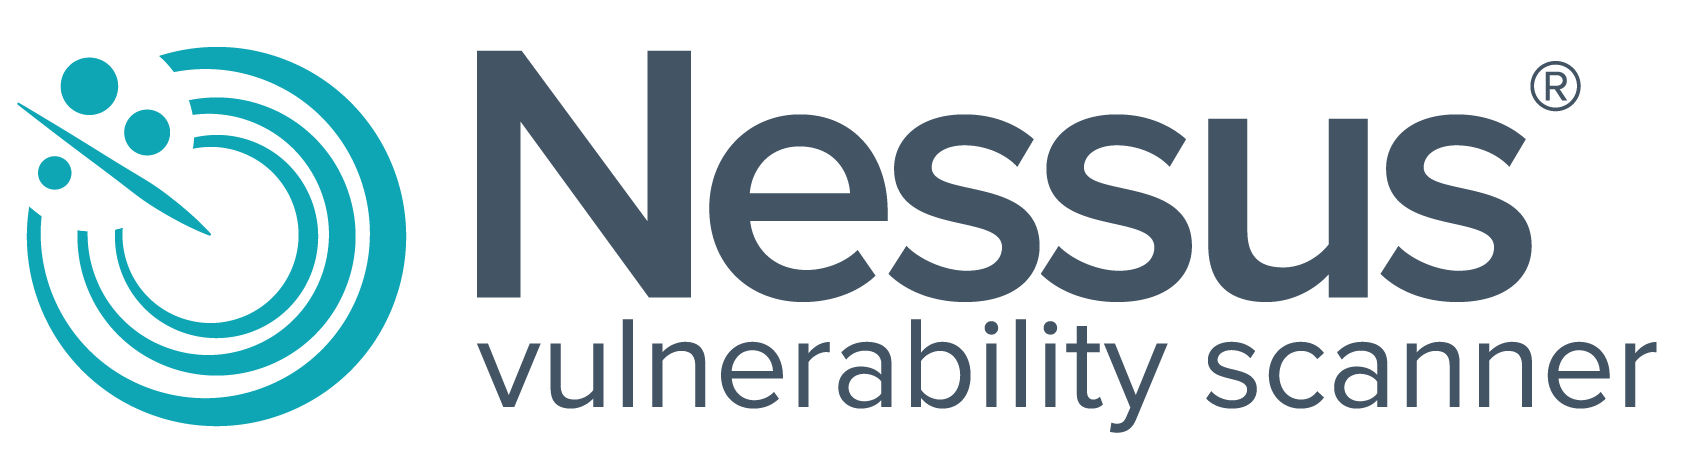 nessus vulnerability scanner